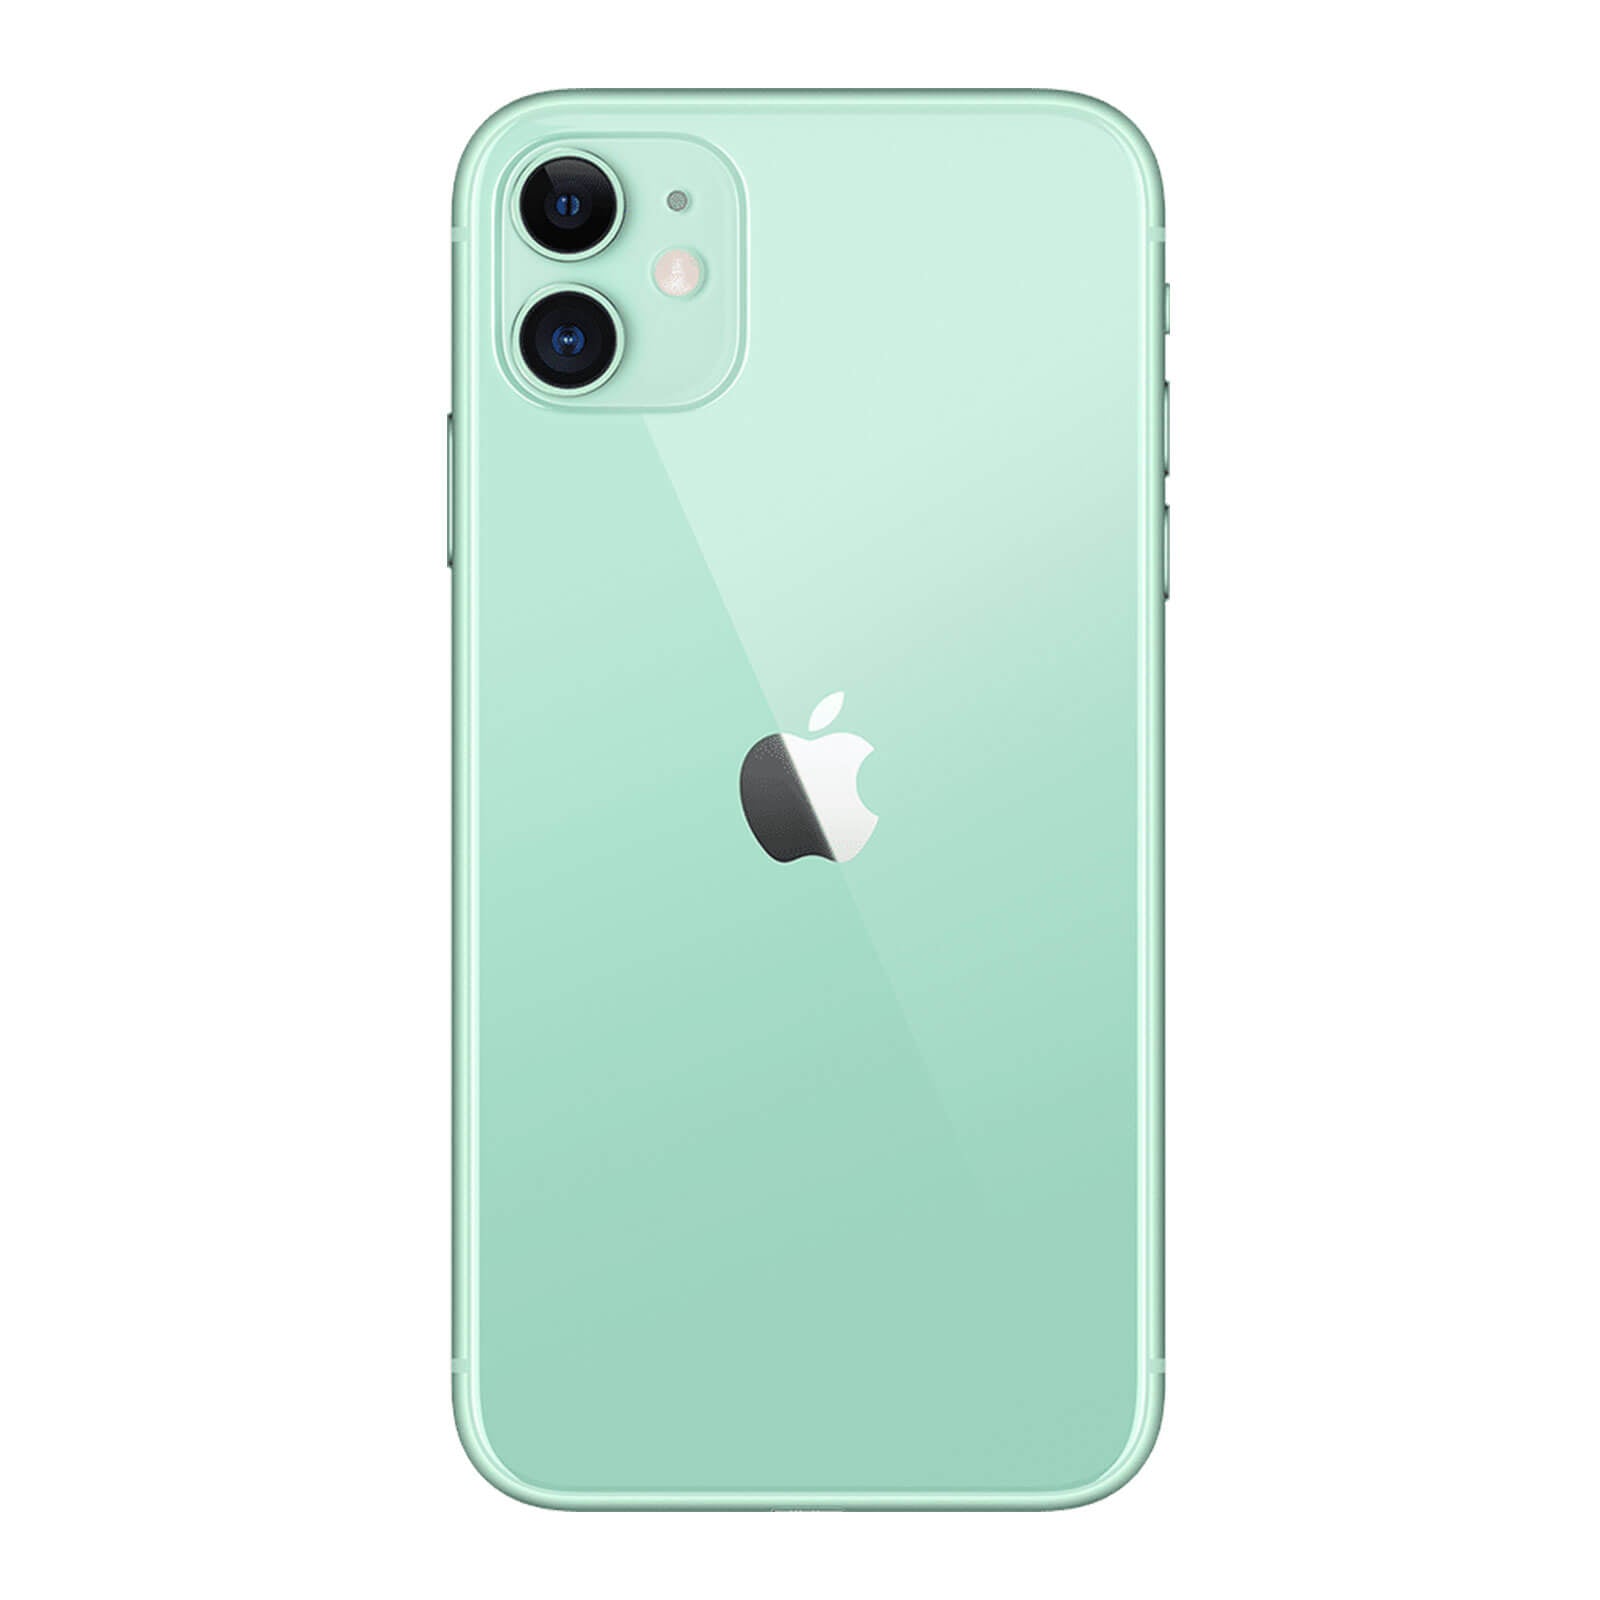 Apple iPhone 11 128GB Green Good - Verizon